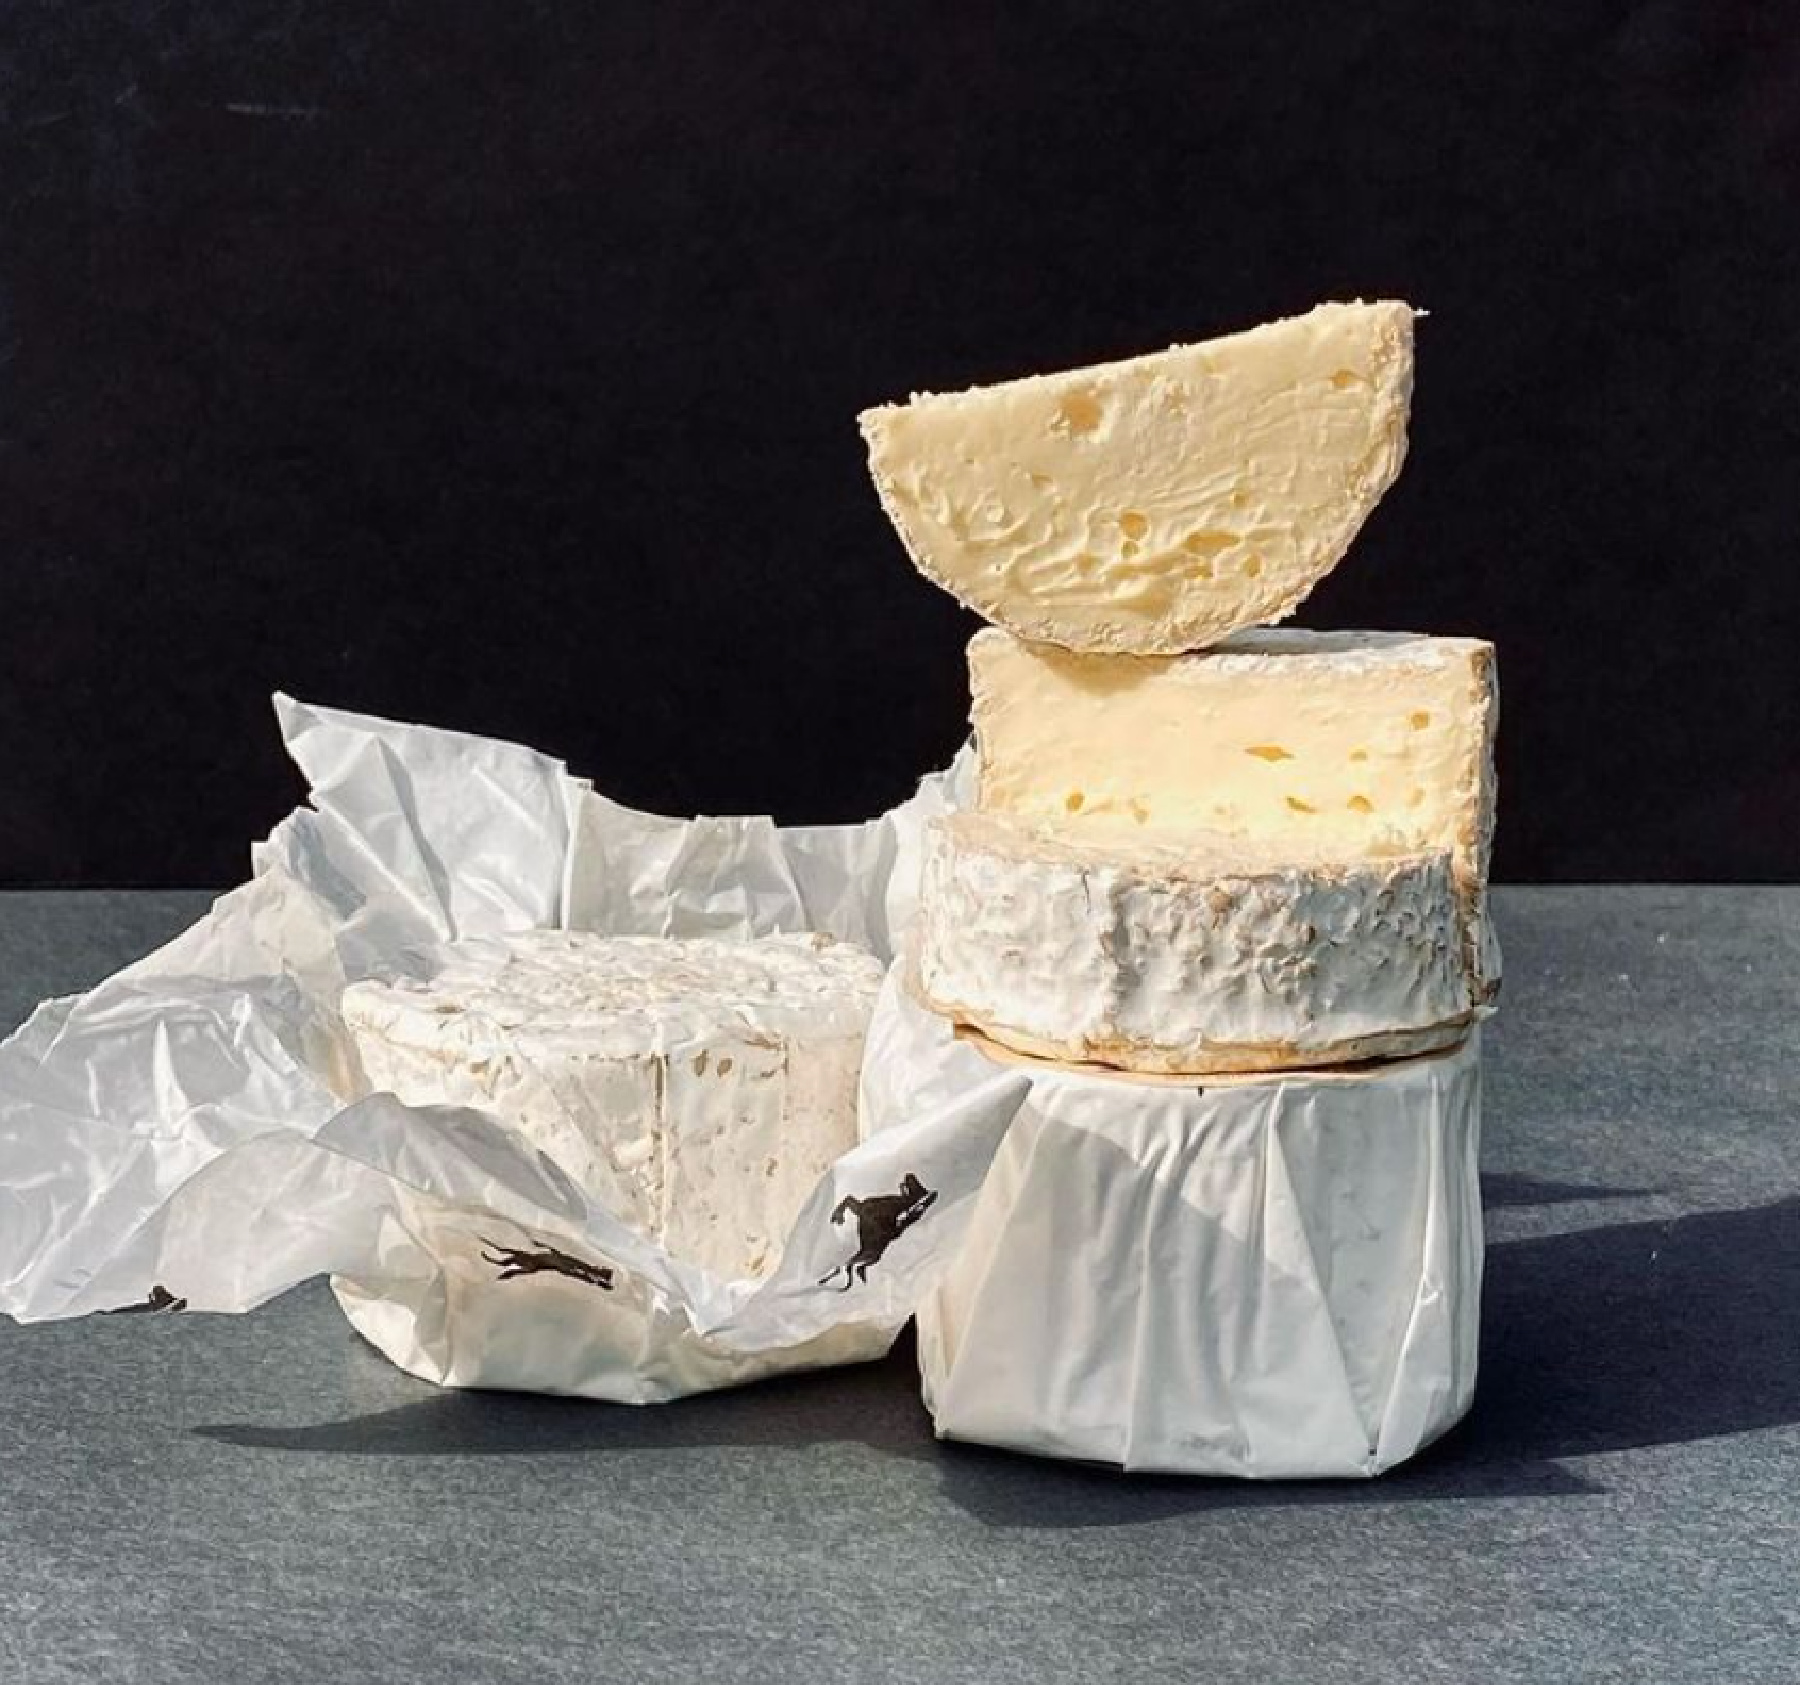 Cowgirl creamery’s Organic Mt Tam cheese